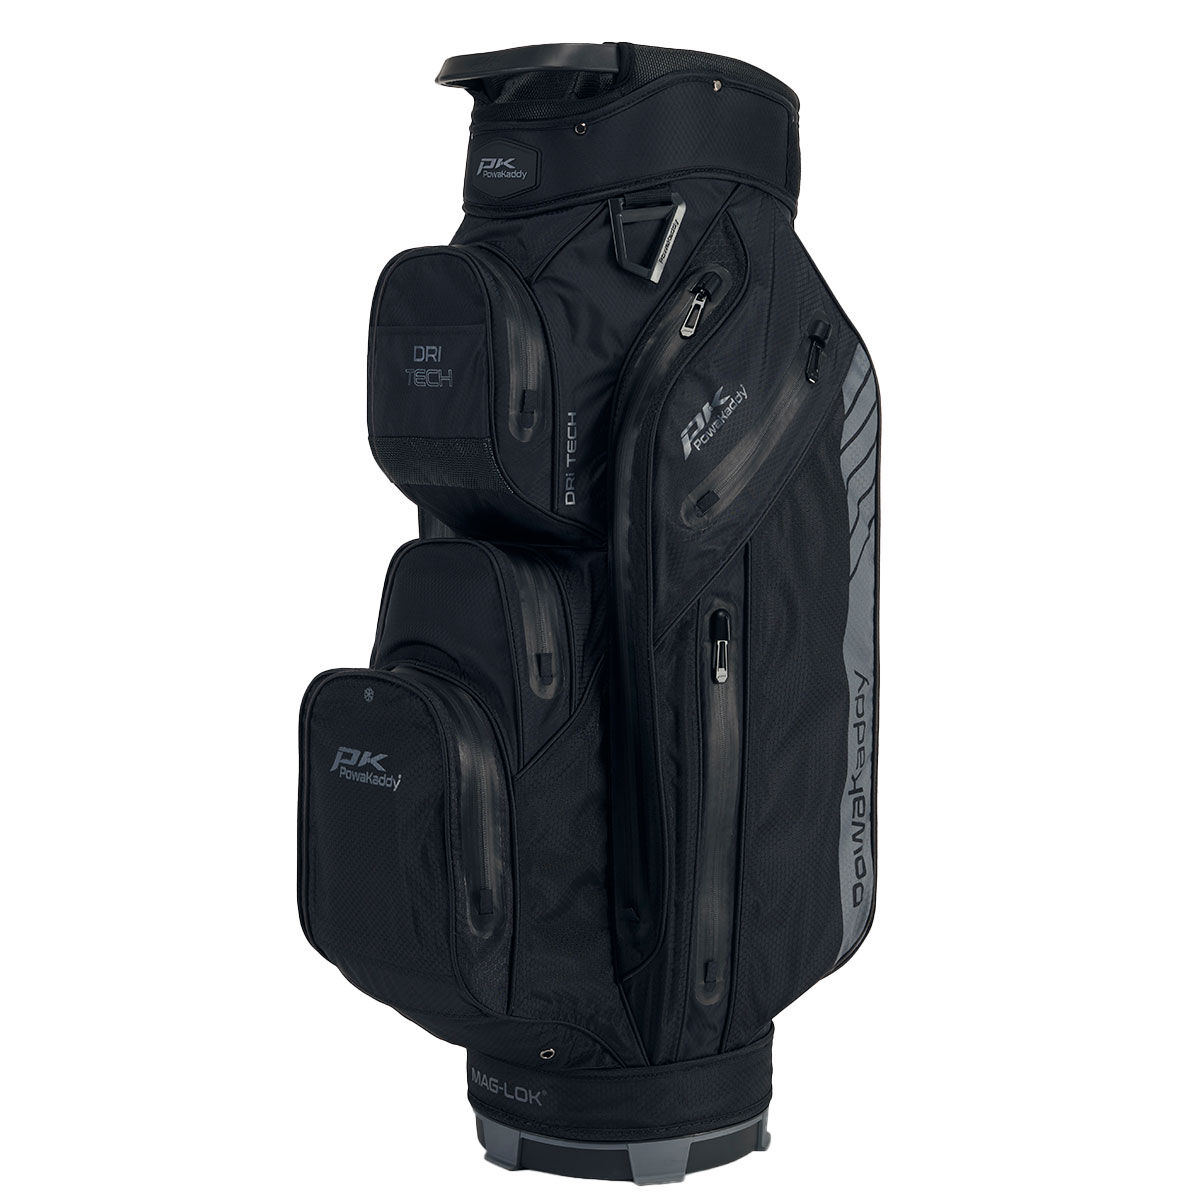 PowaKaddy Black Waterproof Dri Tech Golf Cart Bag | American Golf von PowaKaddy